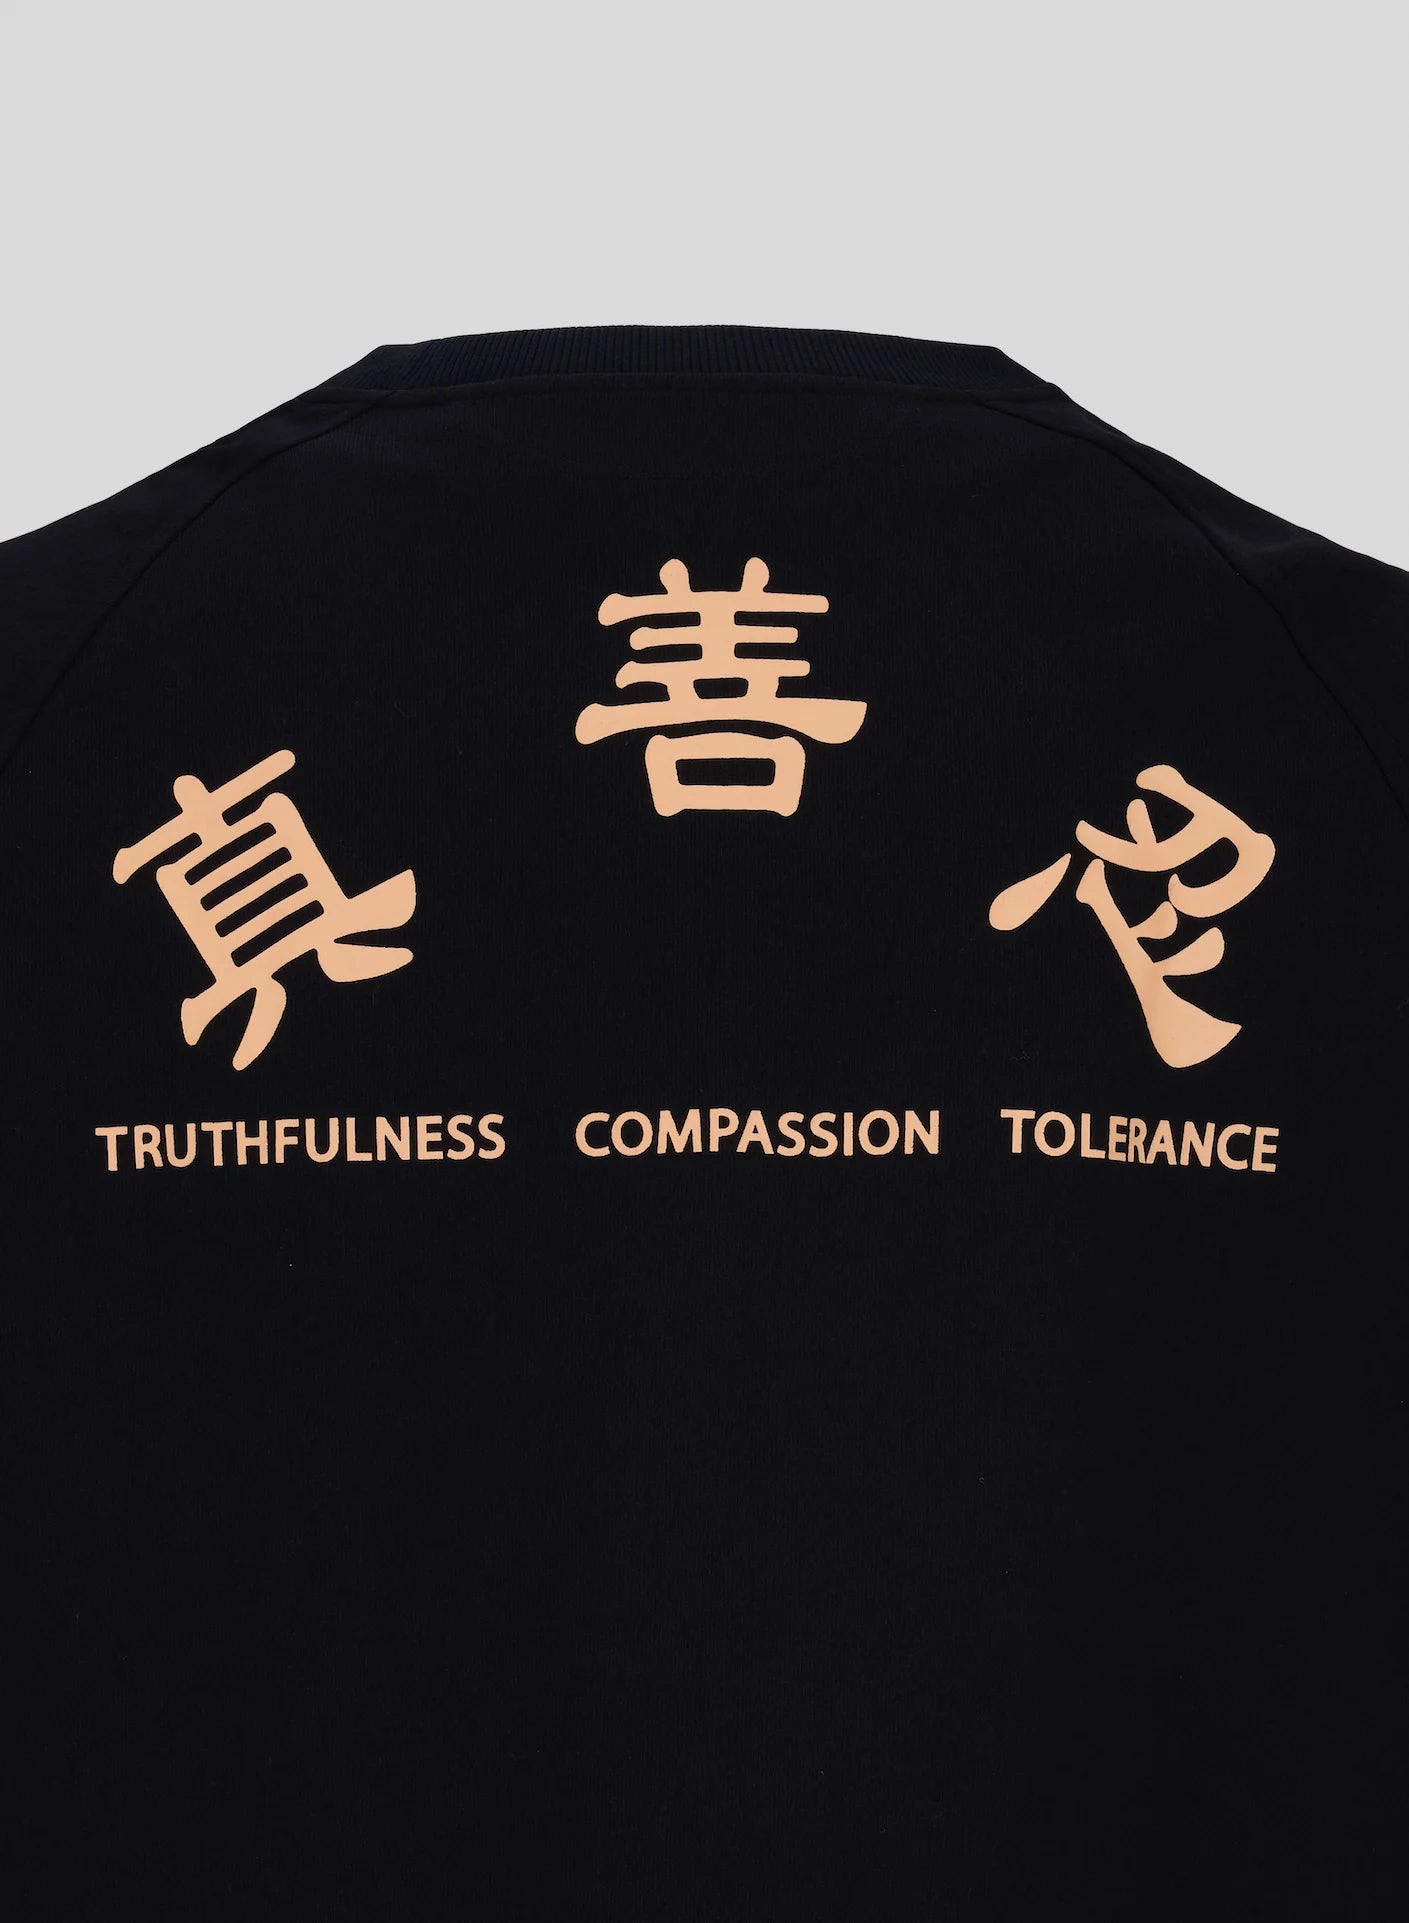 Men's Timeless Virtues Lightweight Sweatshirt - Black